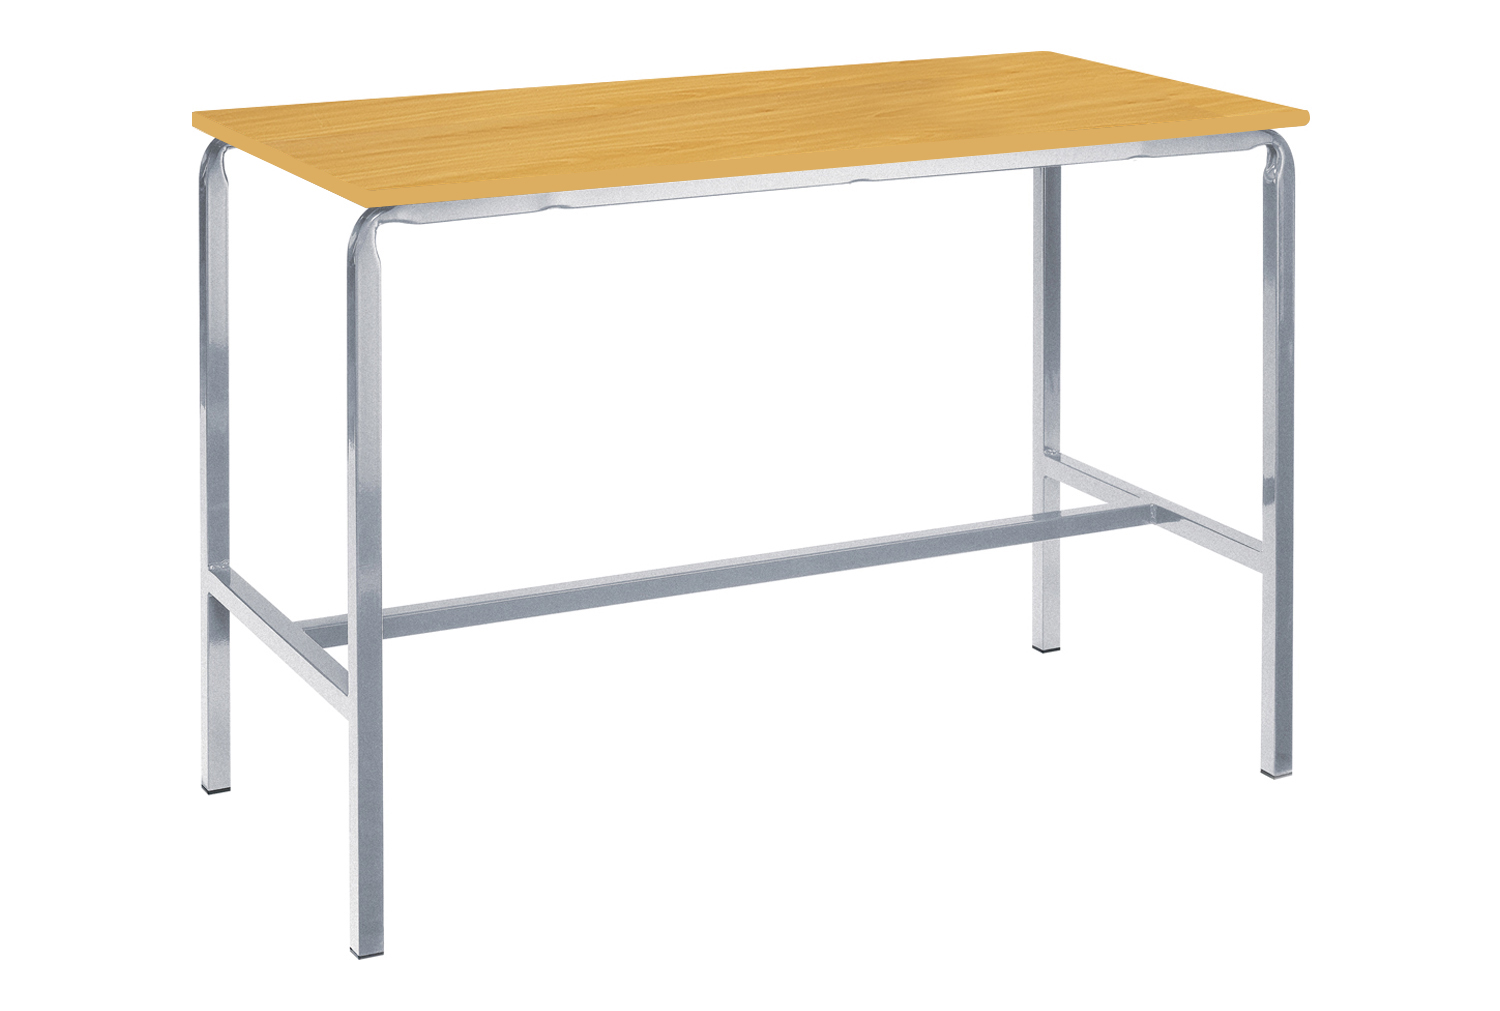 Qty 2 - Crush Bent Craft Tables (MDF Edge), 120wx60dx90h (cm), Speckled Grey Frame, Blue